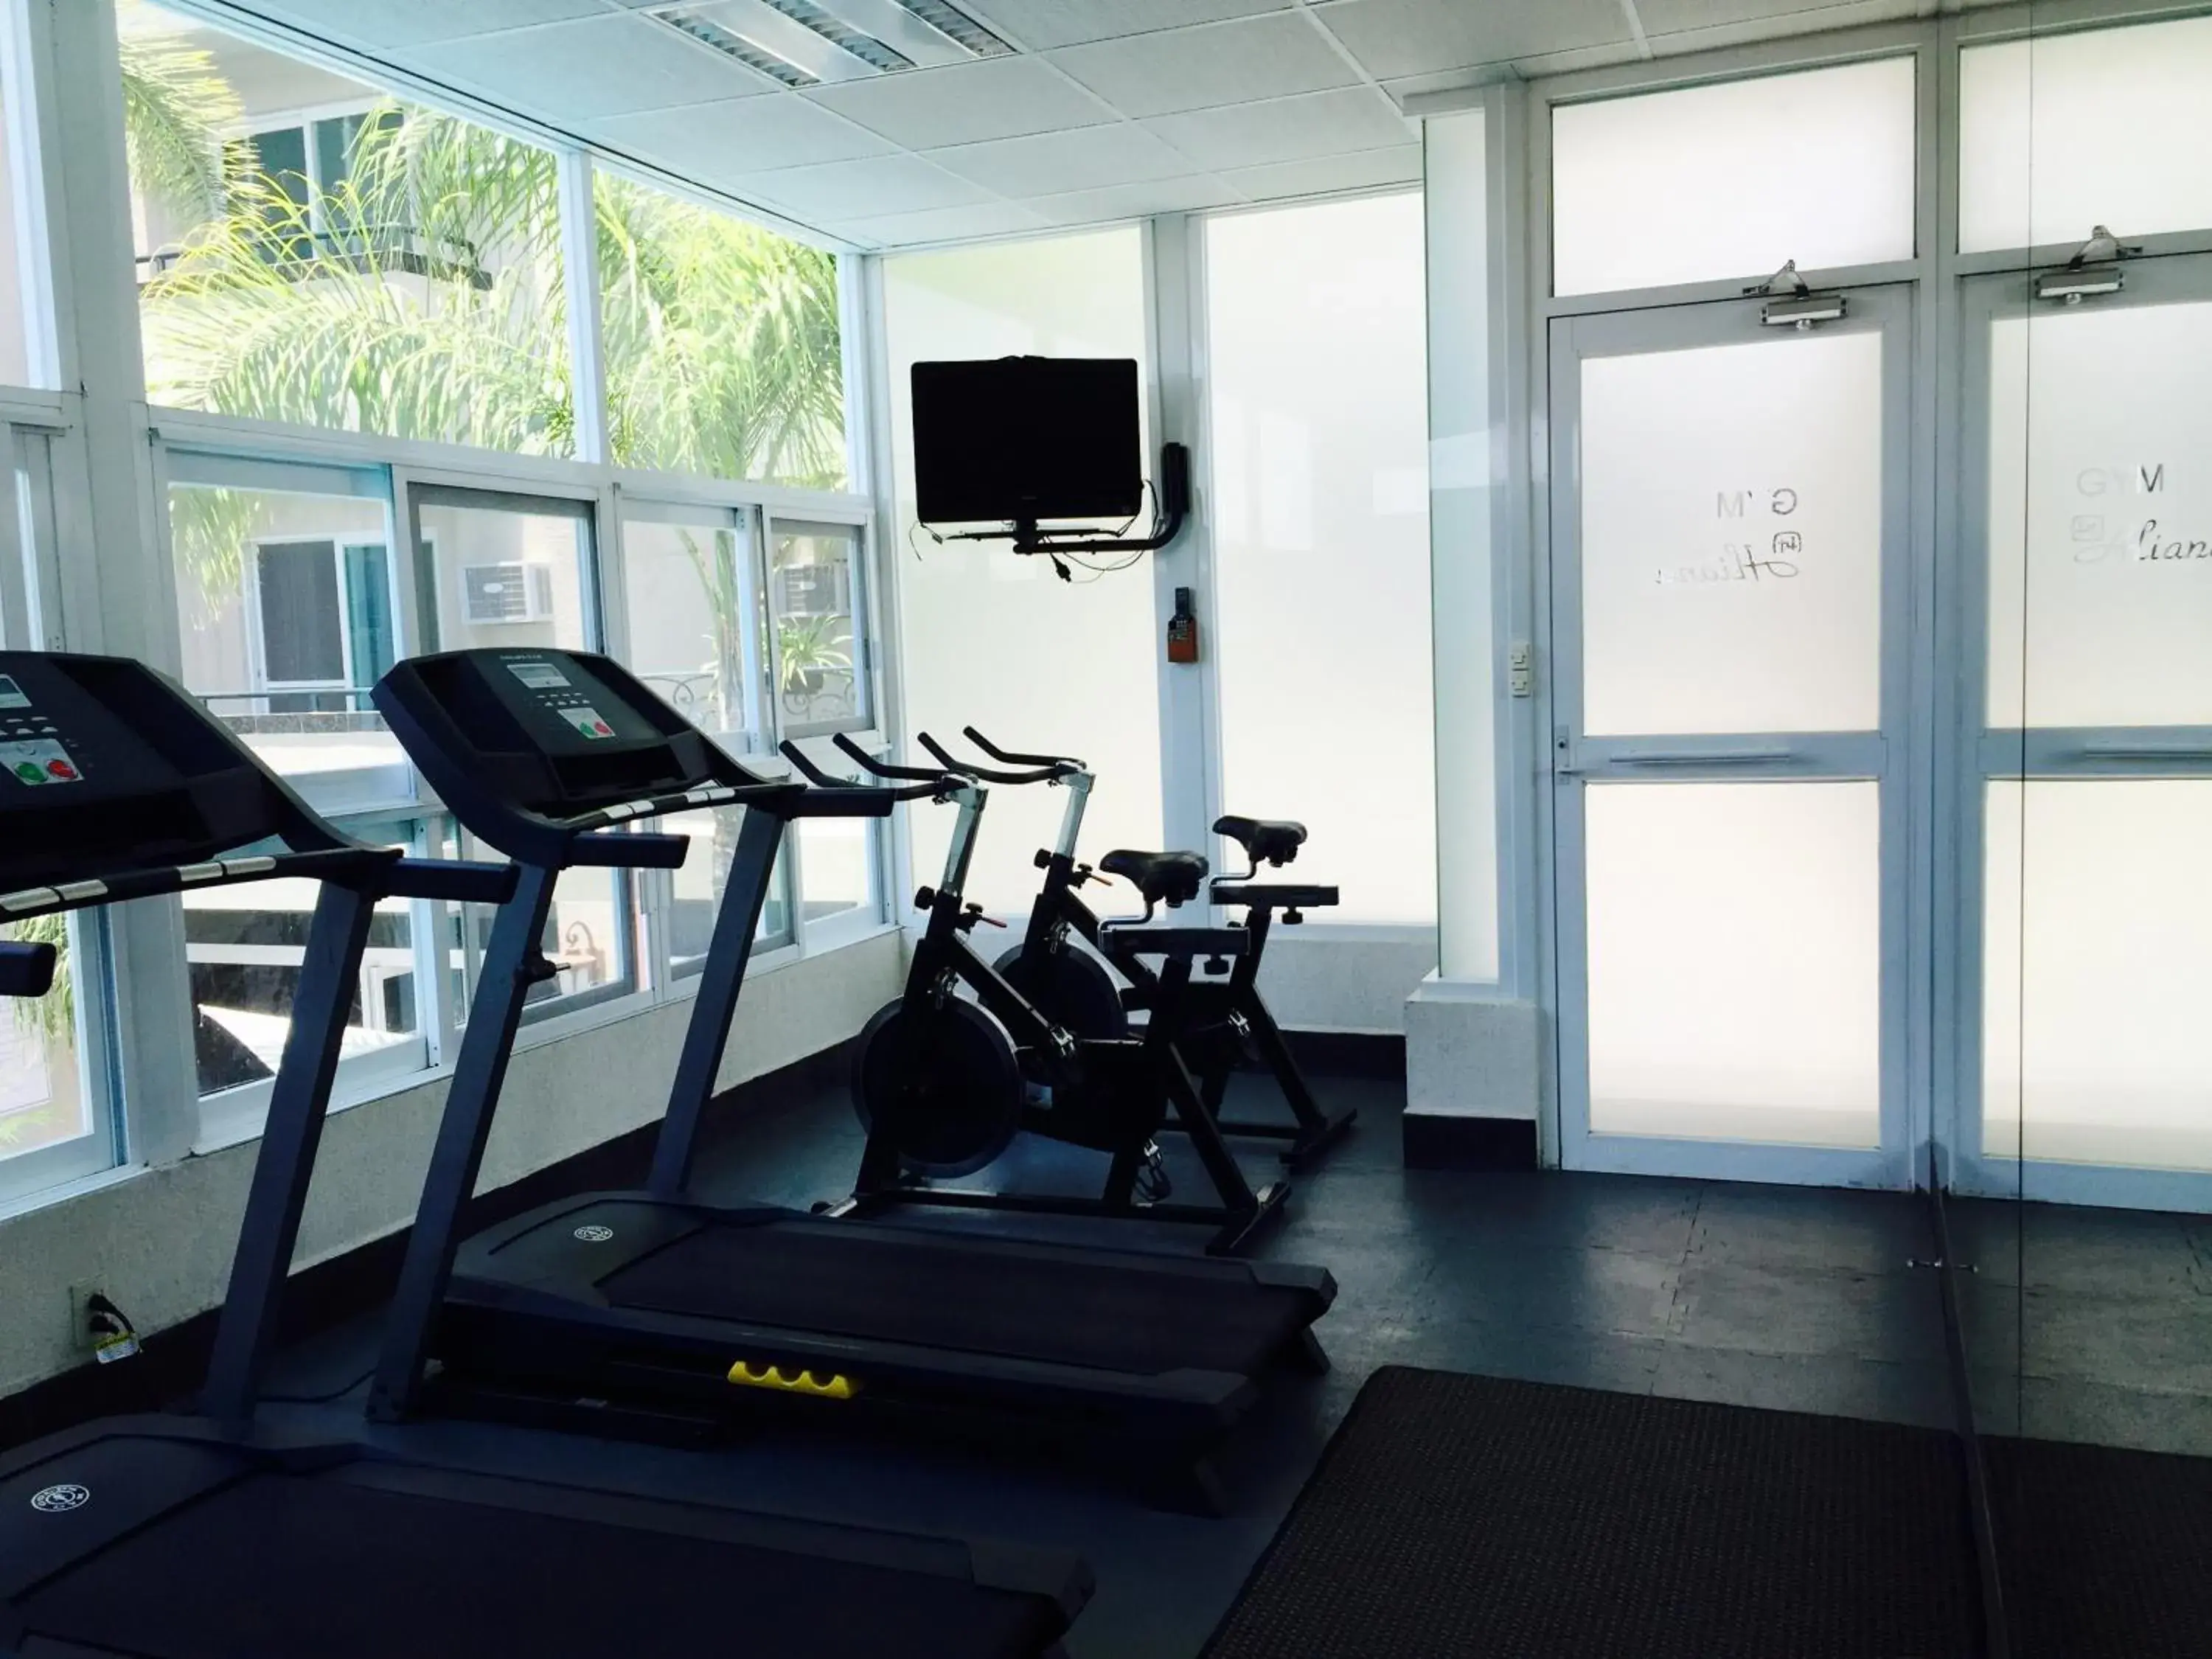 Fitness centre/facilities, Fitness Center/Facilities in Hotel Aliana